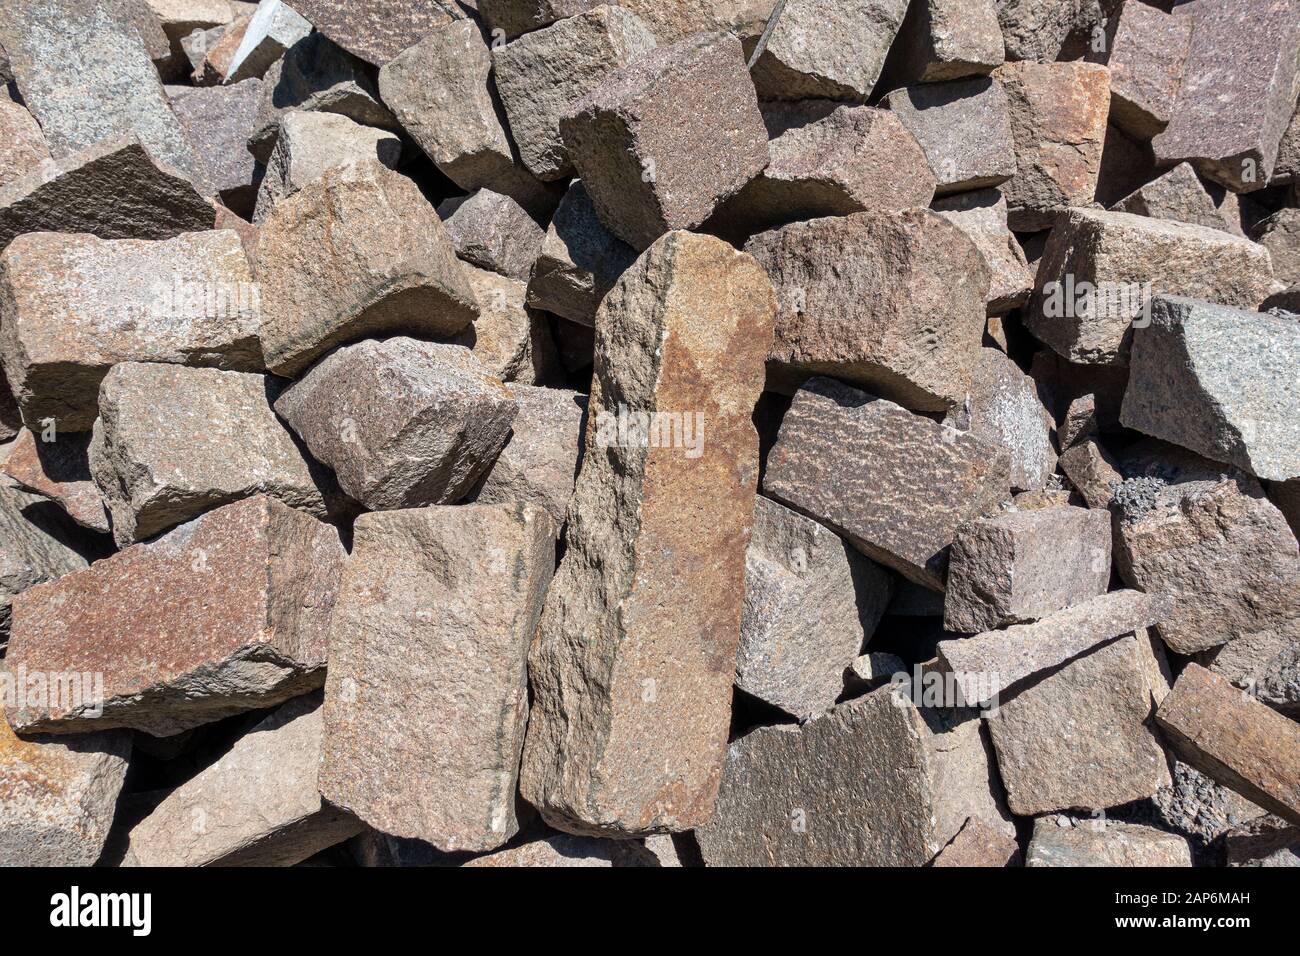 Rough, broken granite paving stones in a heap Stock Photo